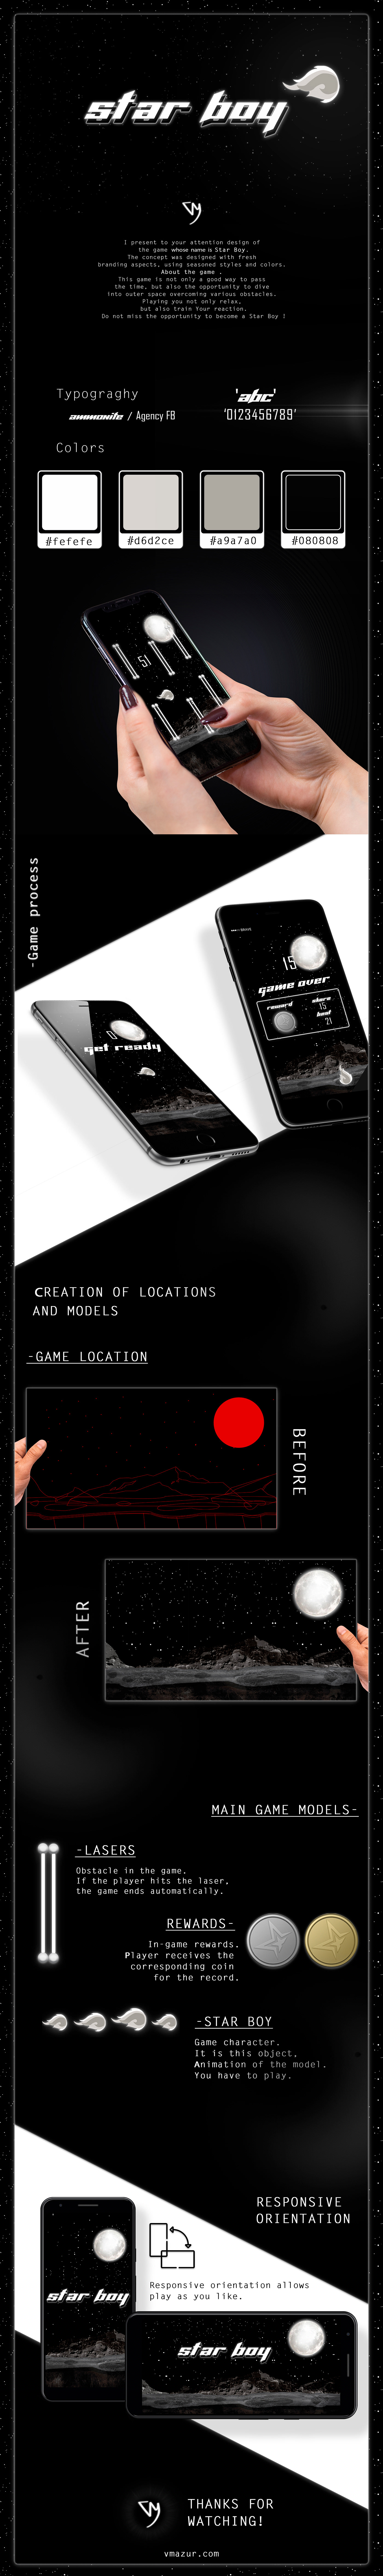 Star Boy Mobile Application design web-design Illustrator photoshop app Project Space  black and white